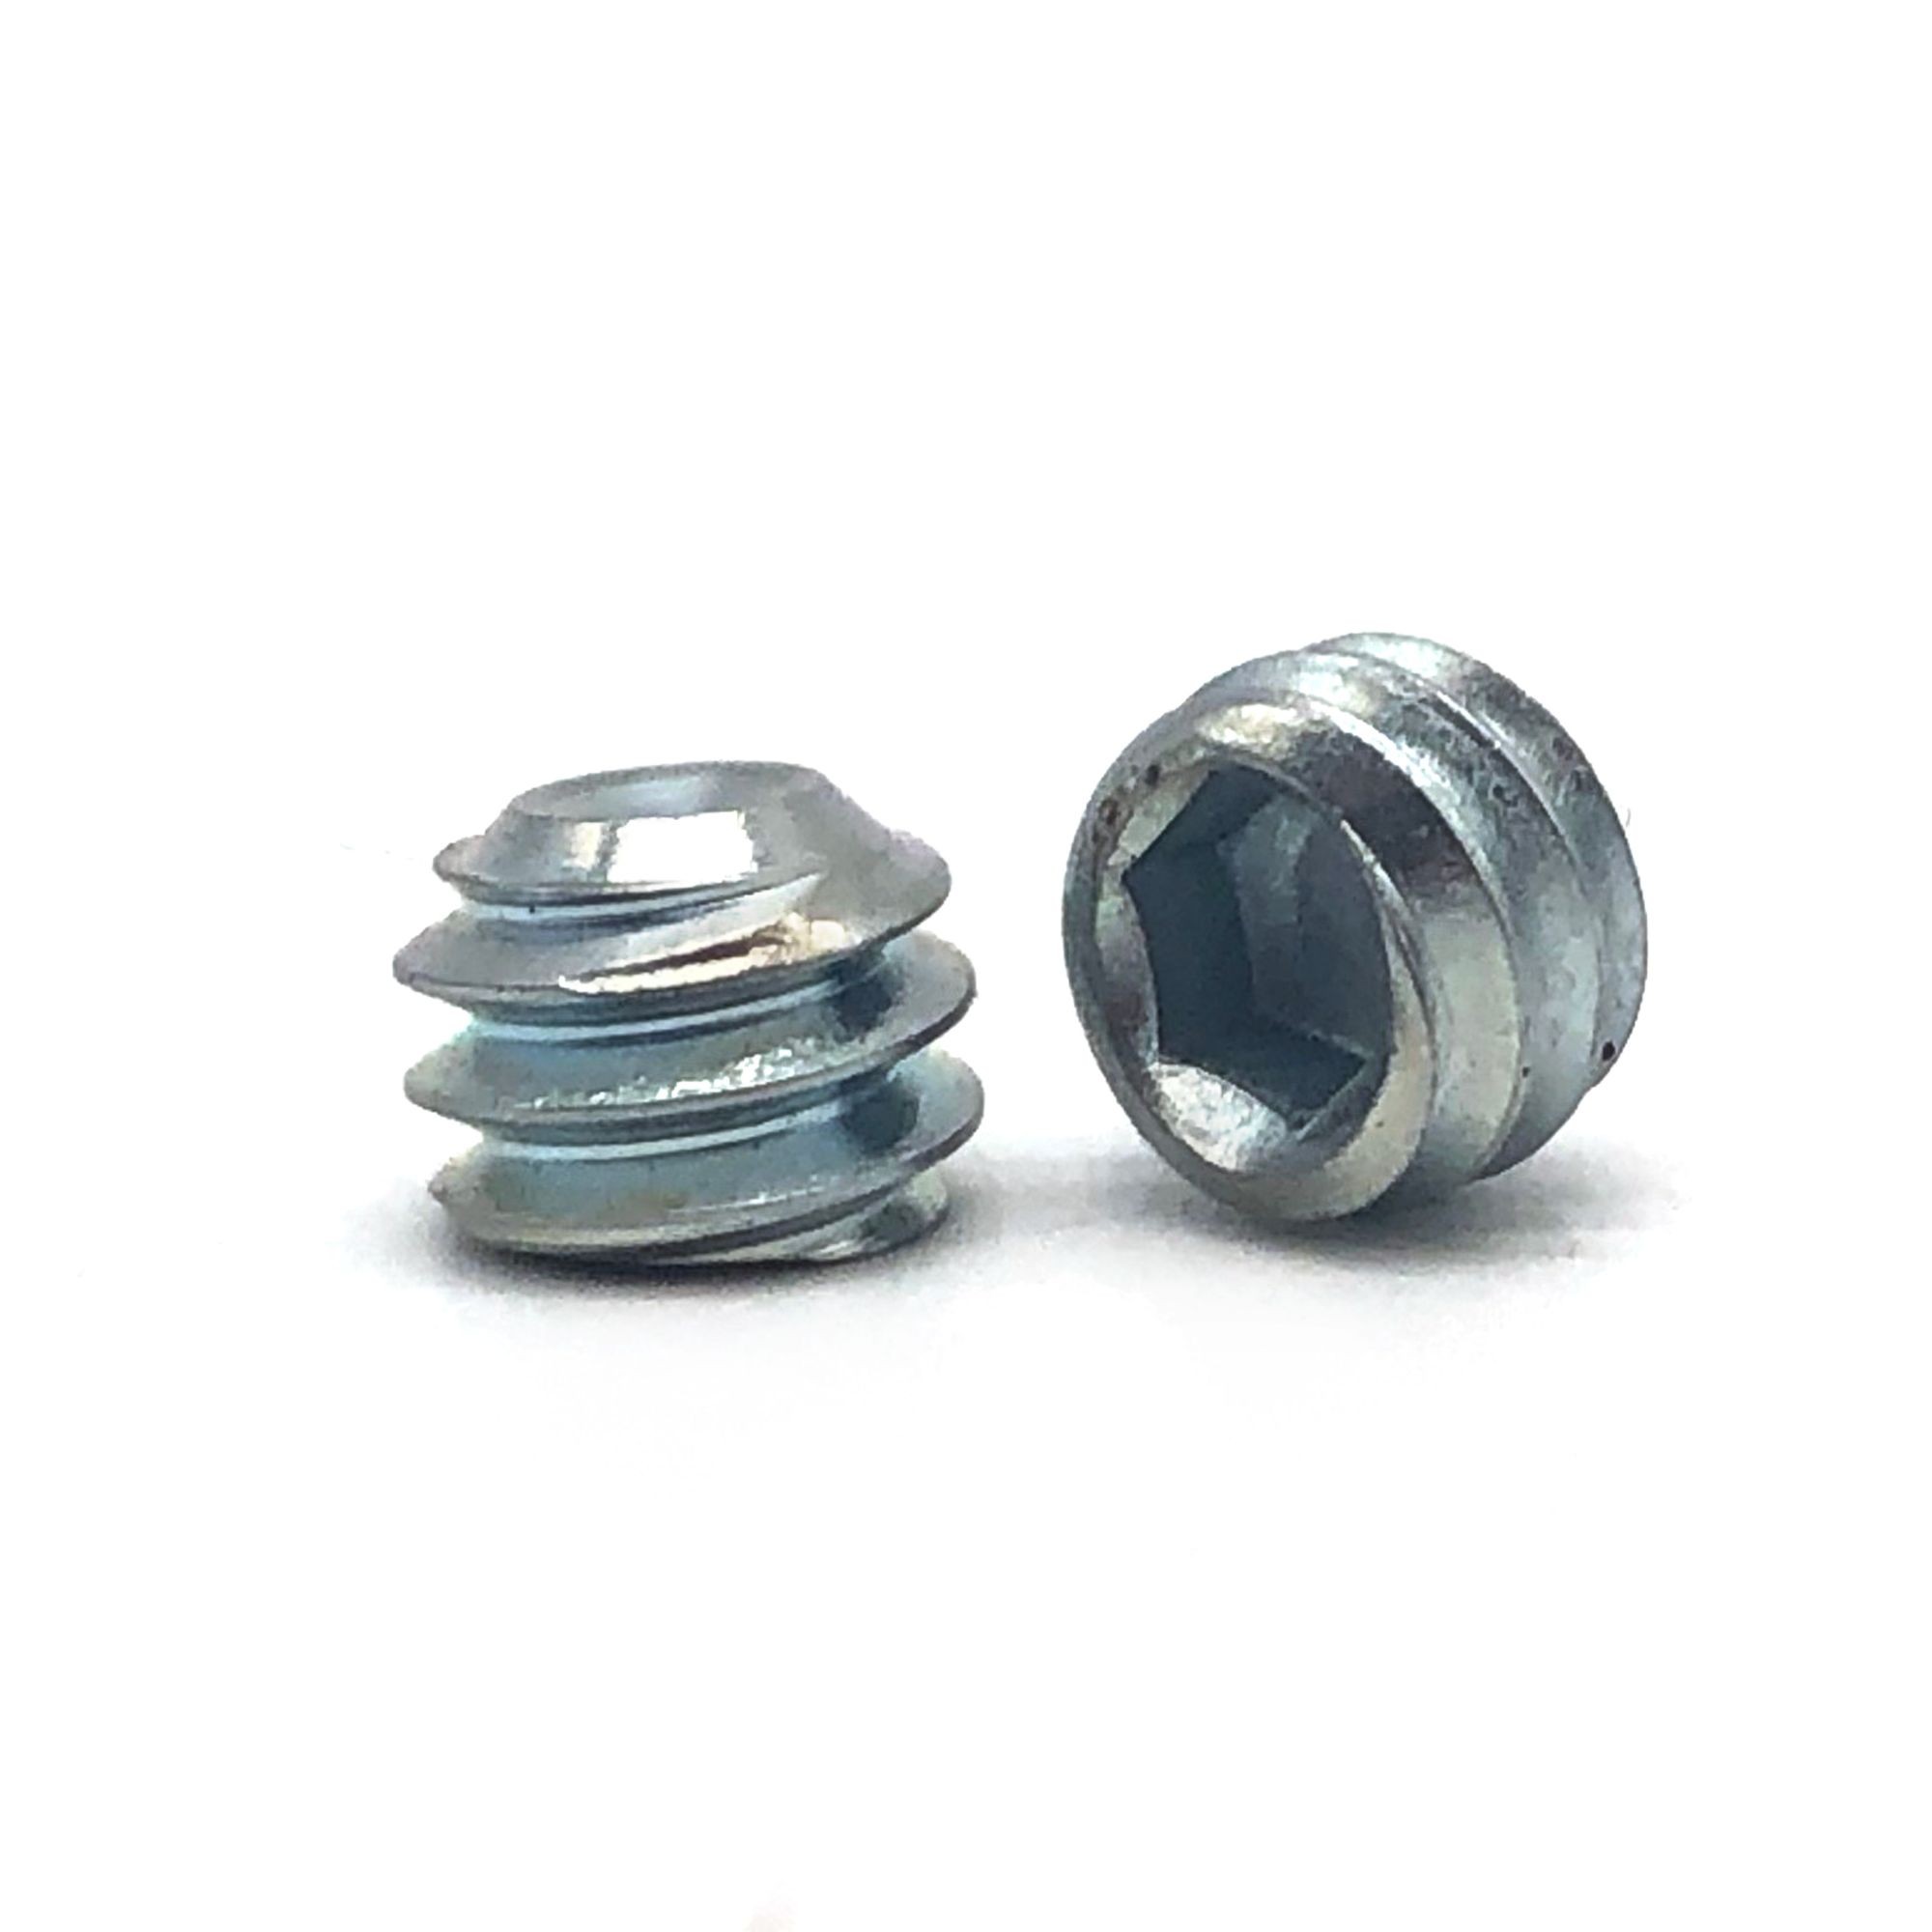 OEM customized size set screws stainless steel socket allen cap set screws